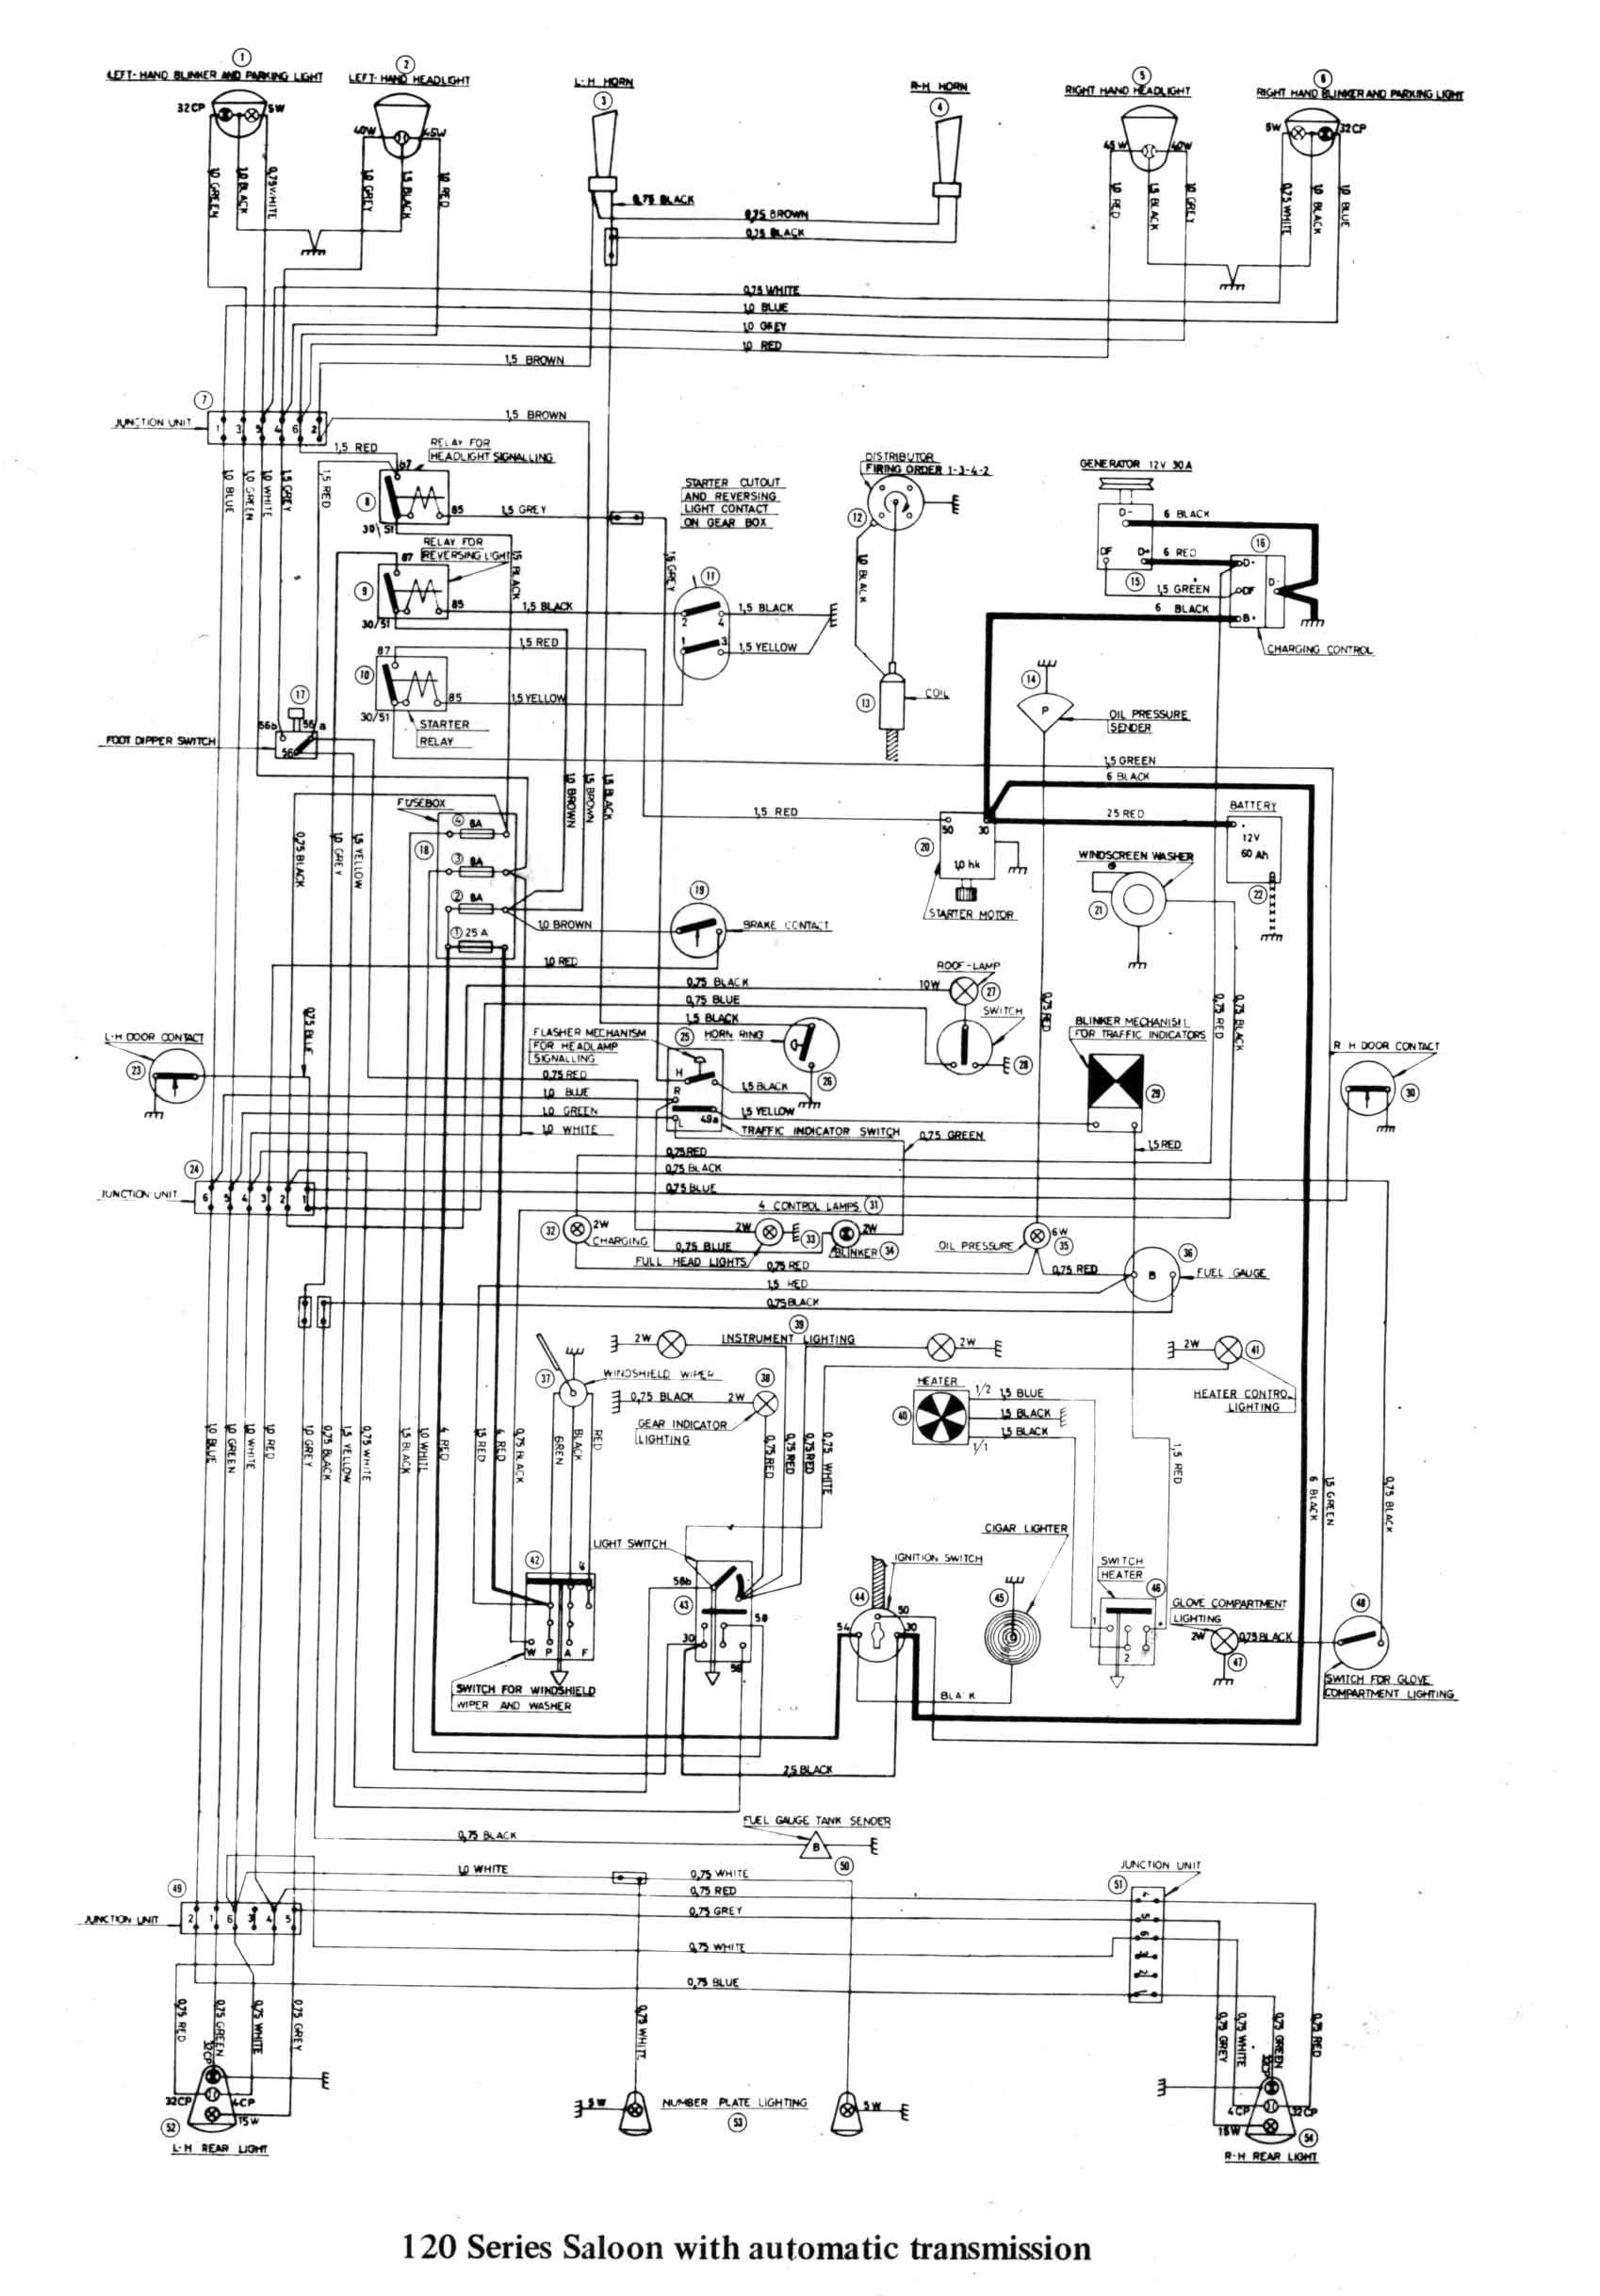 Manual Transmission Diagram Sw Em Od Retrofitting On A Vintage Volvo